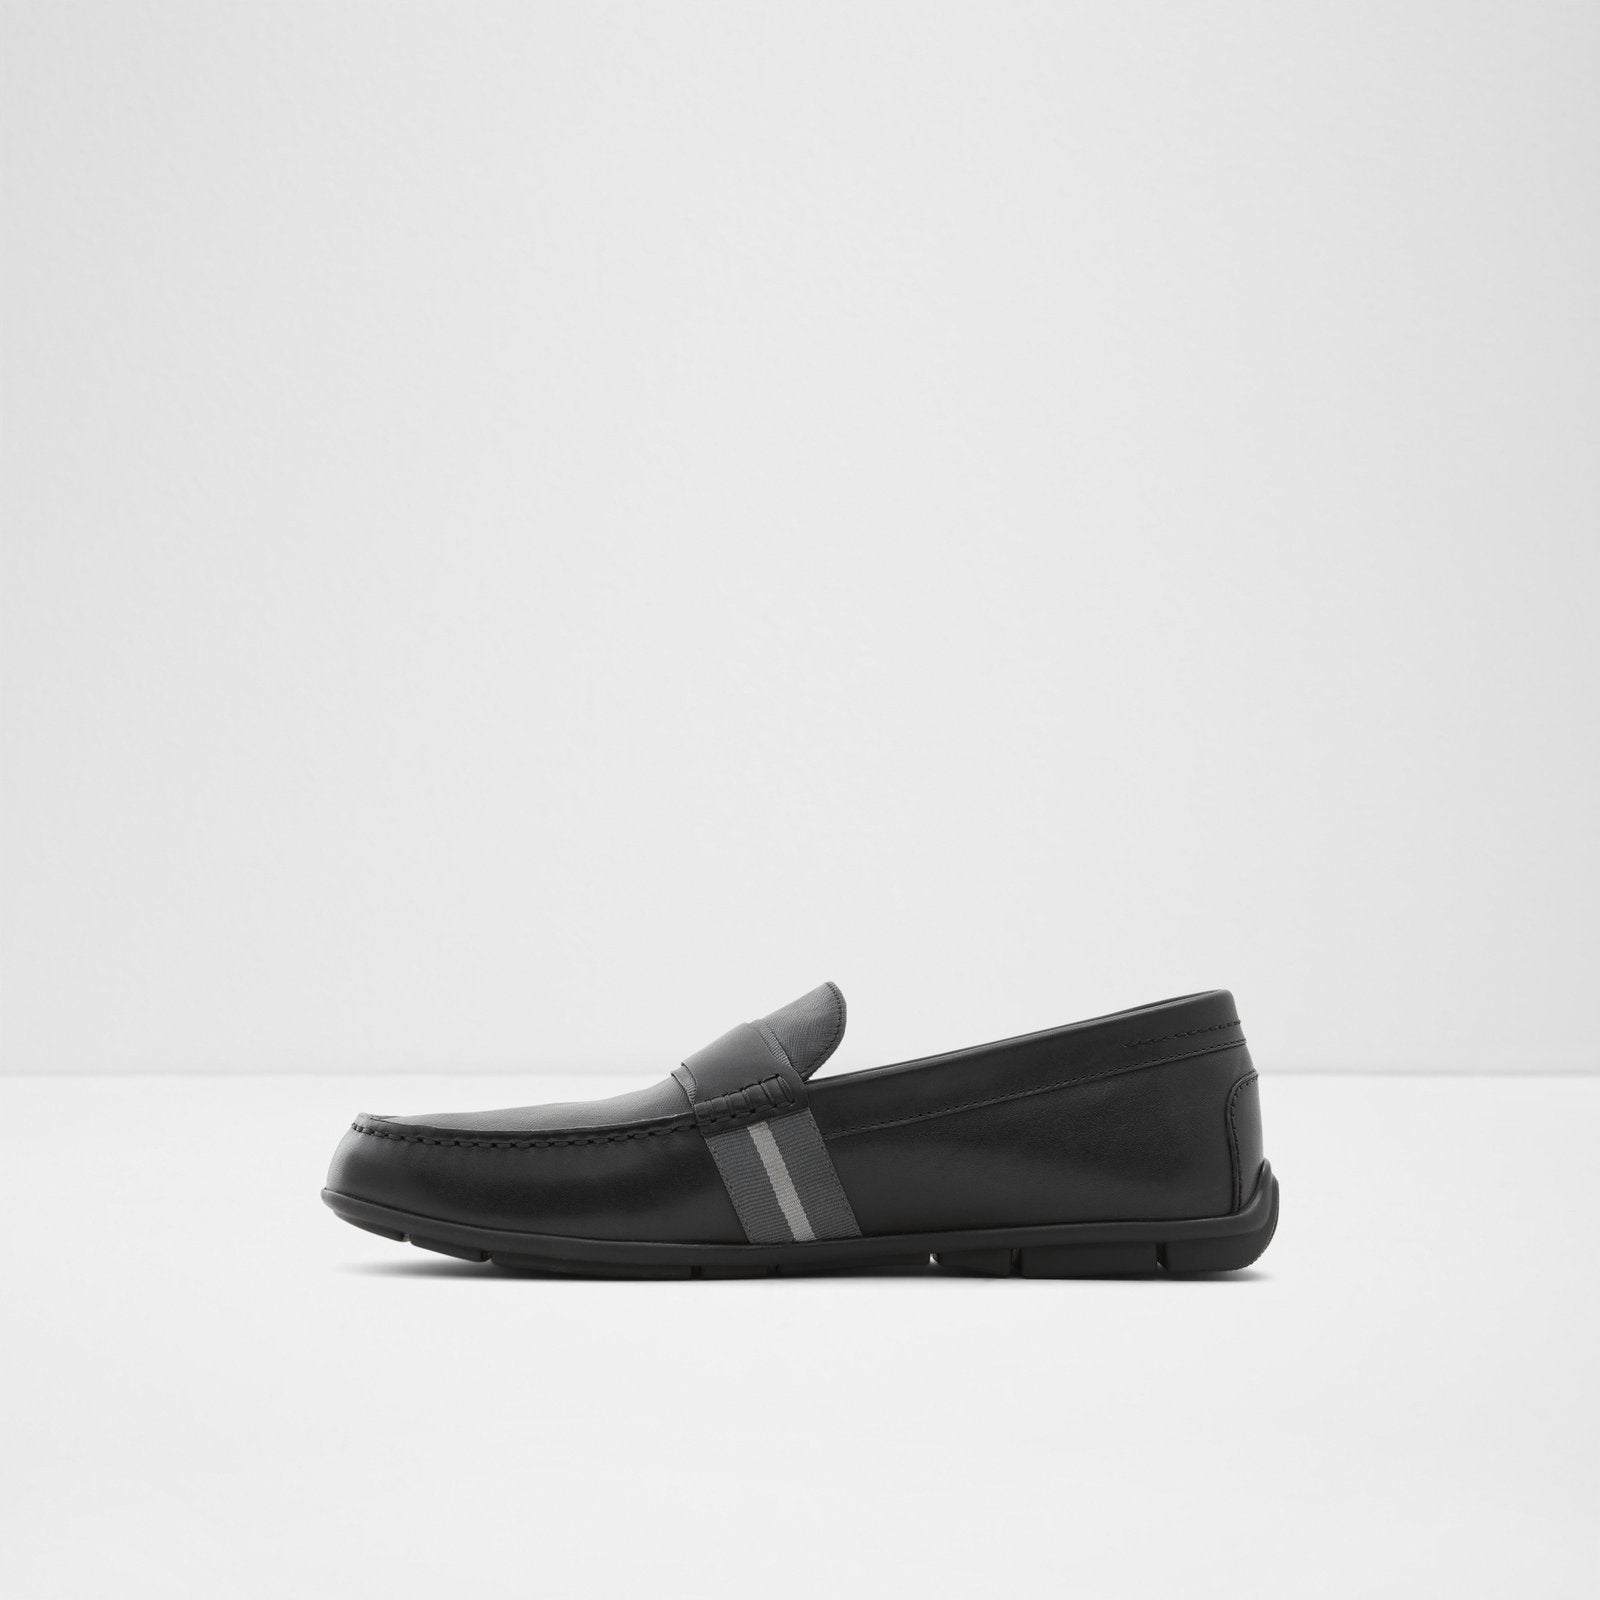 Damianflex / Slip Ons Men Shoes - Black - ALDO KSA